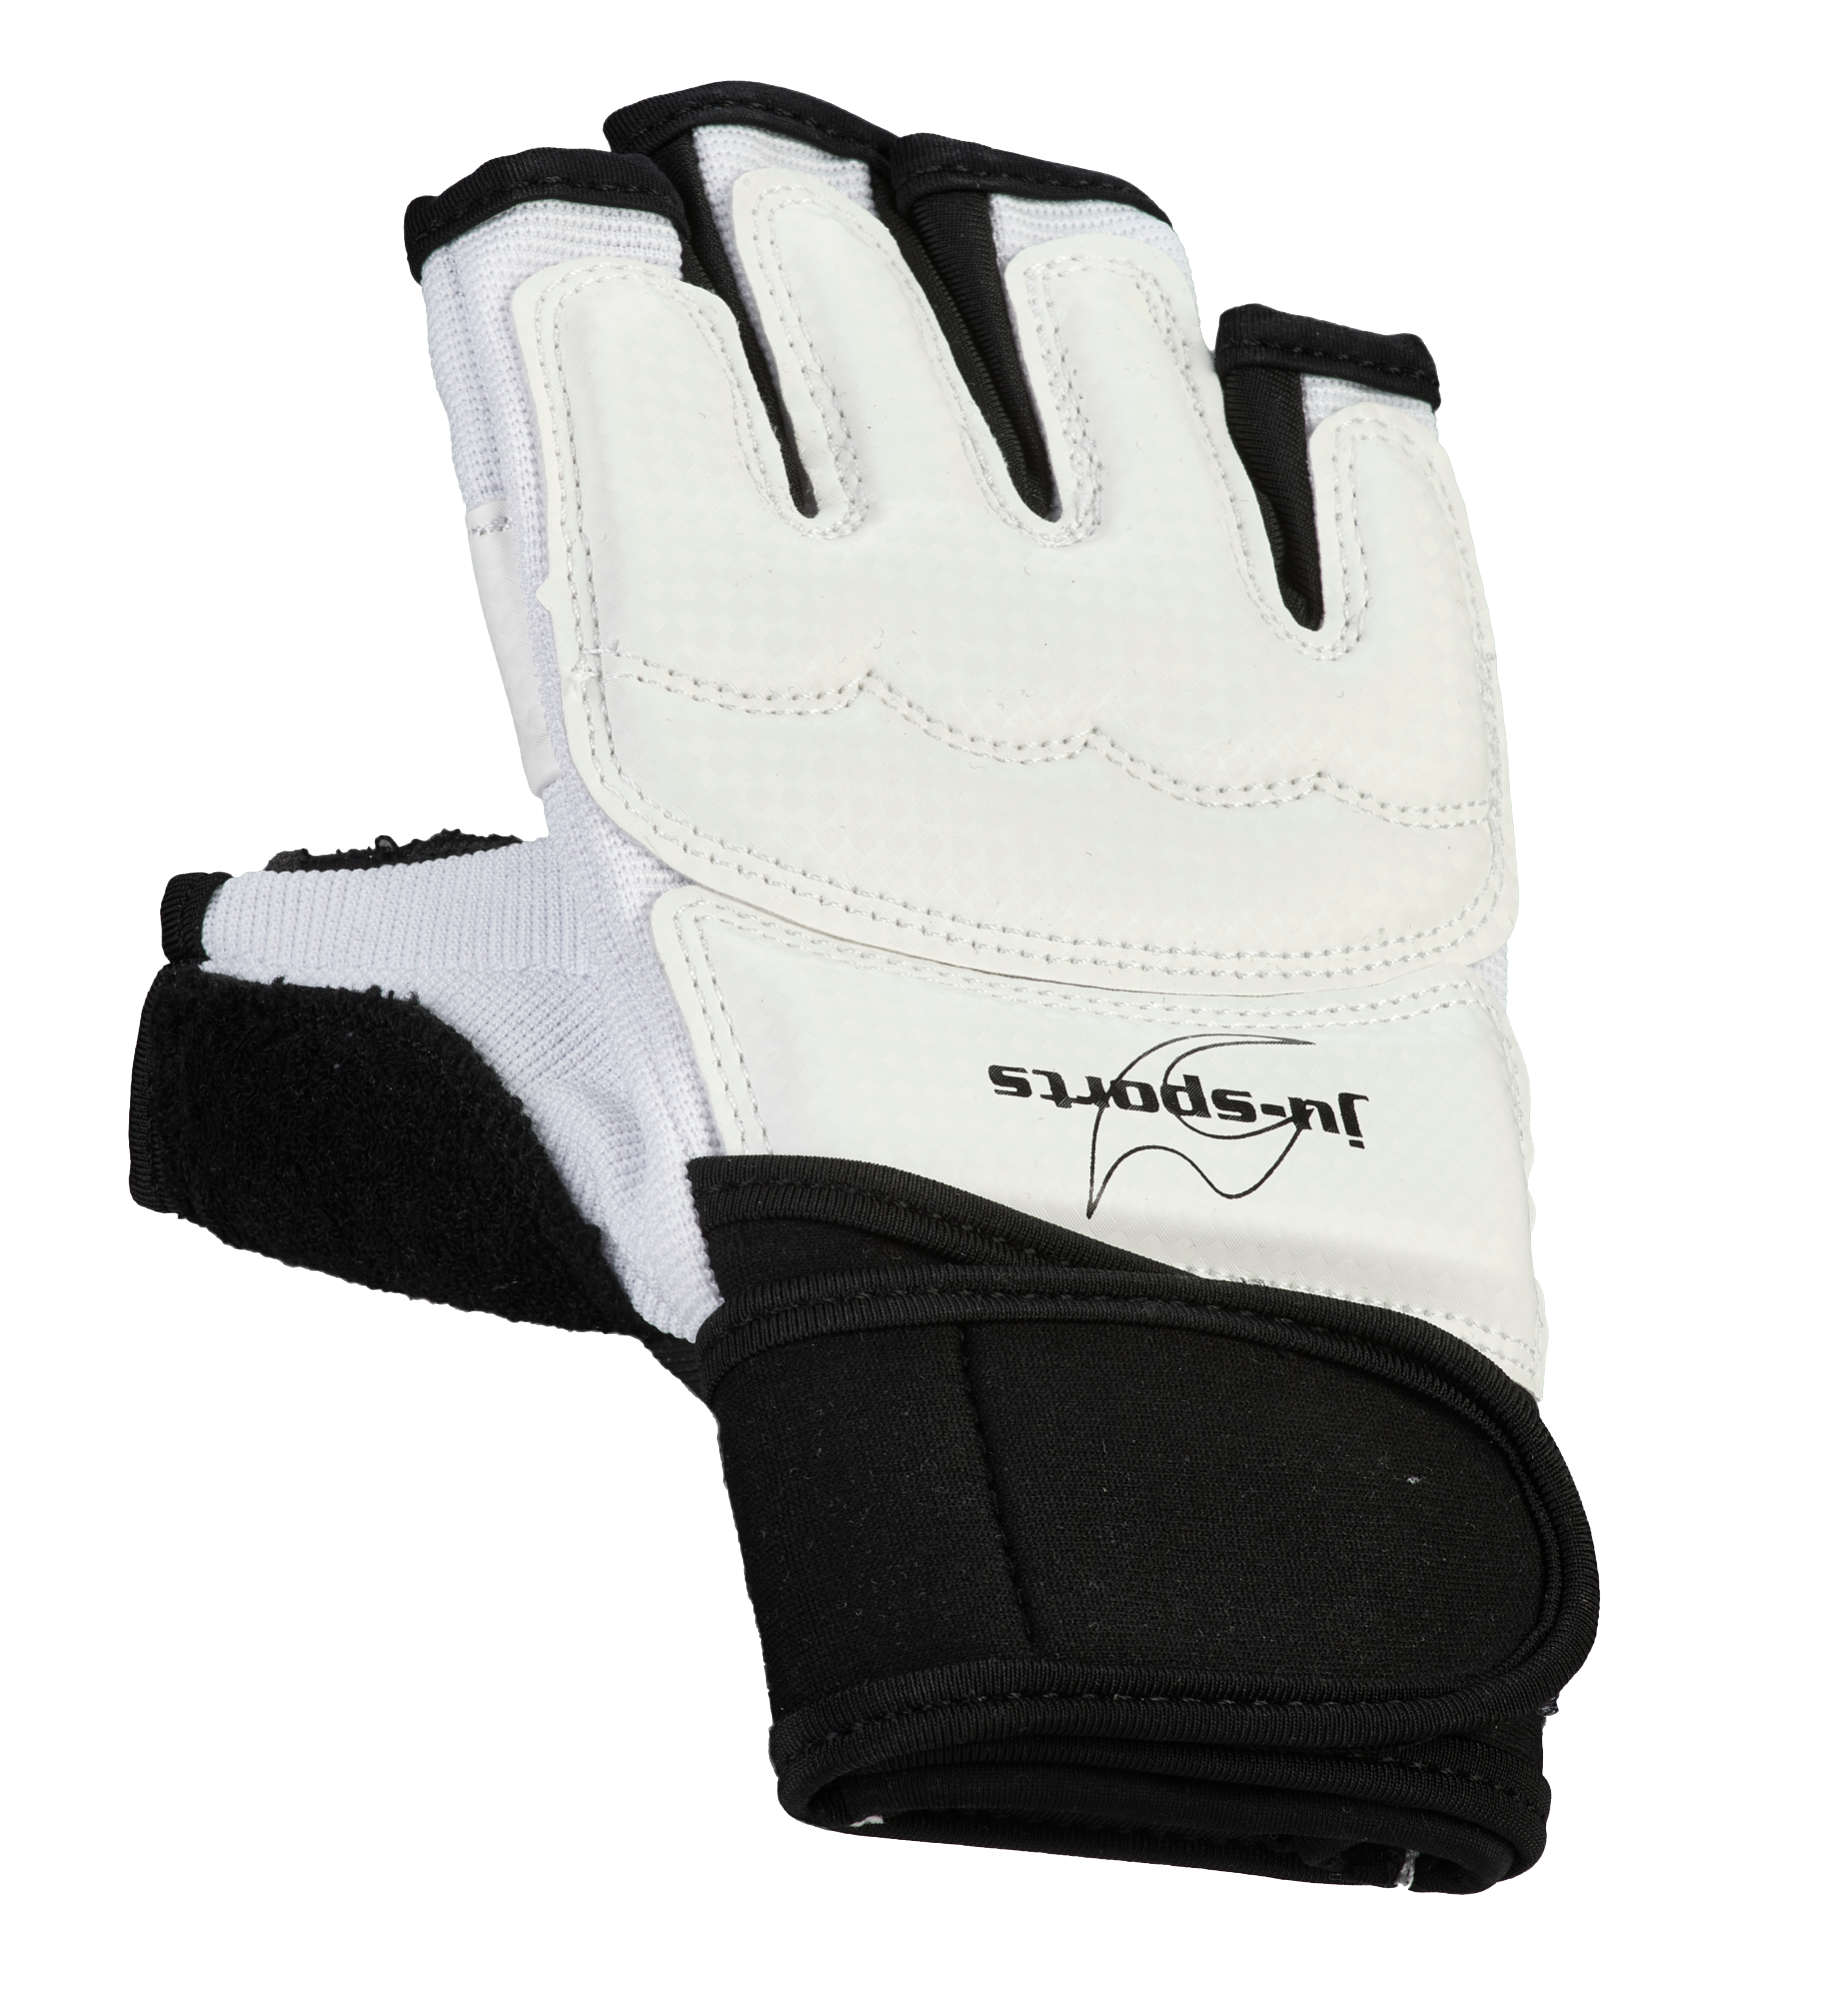 Ju-Sports Taekwondo Gloves V2